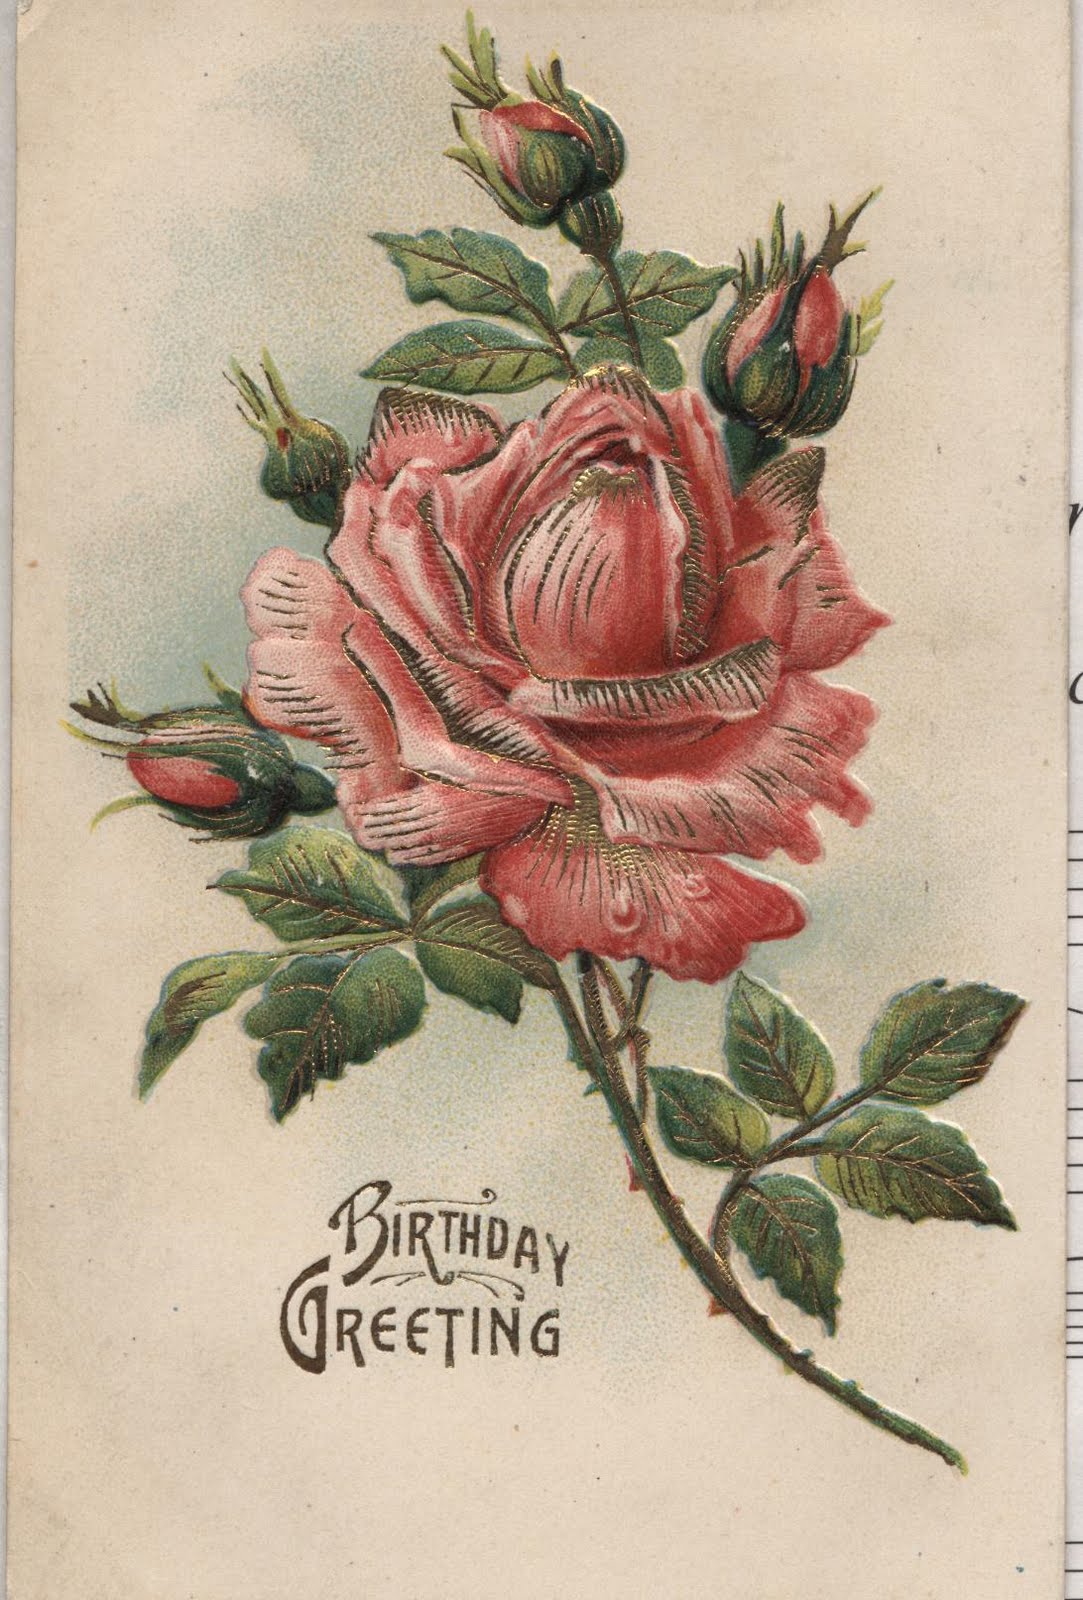 nancarts: Beautiful Roses to share